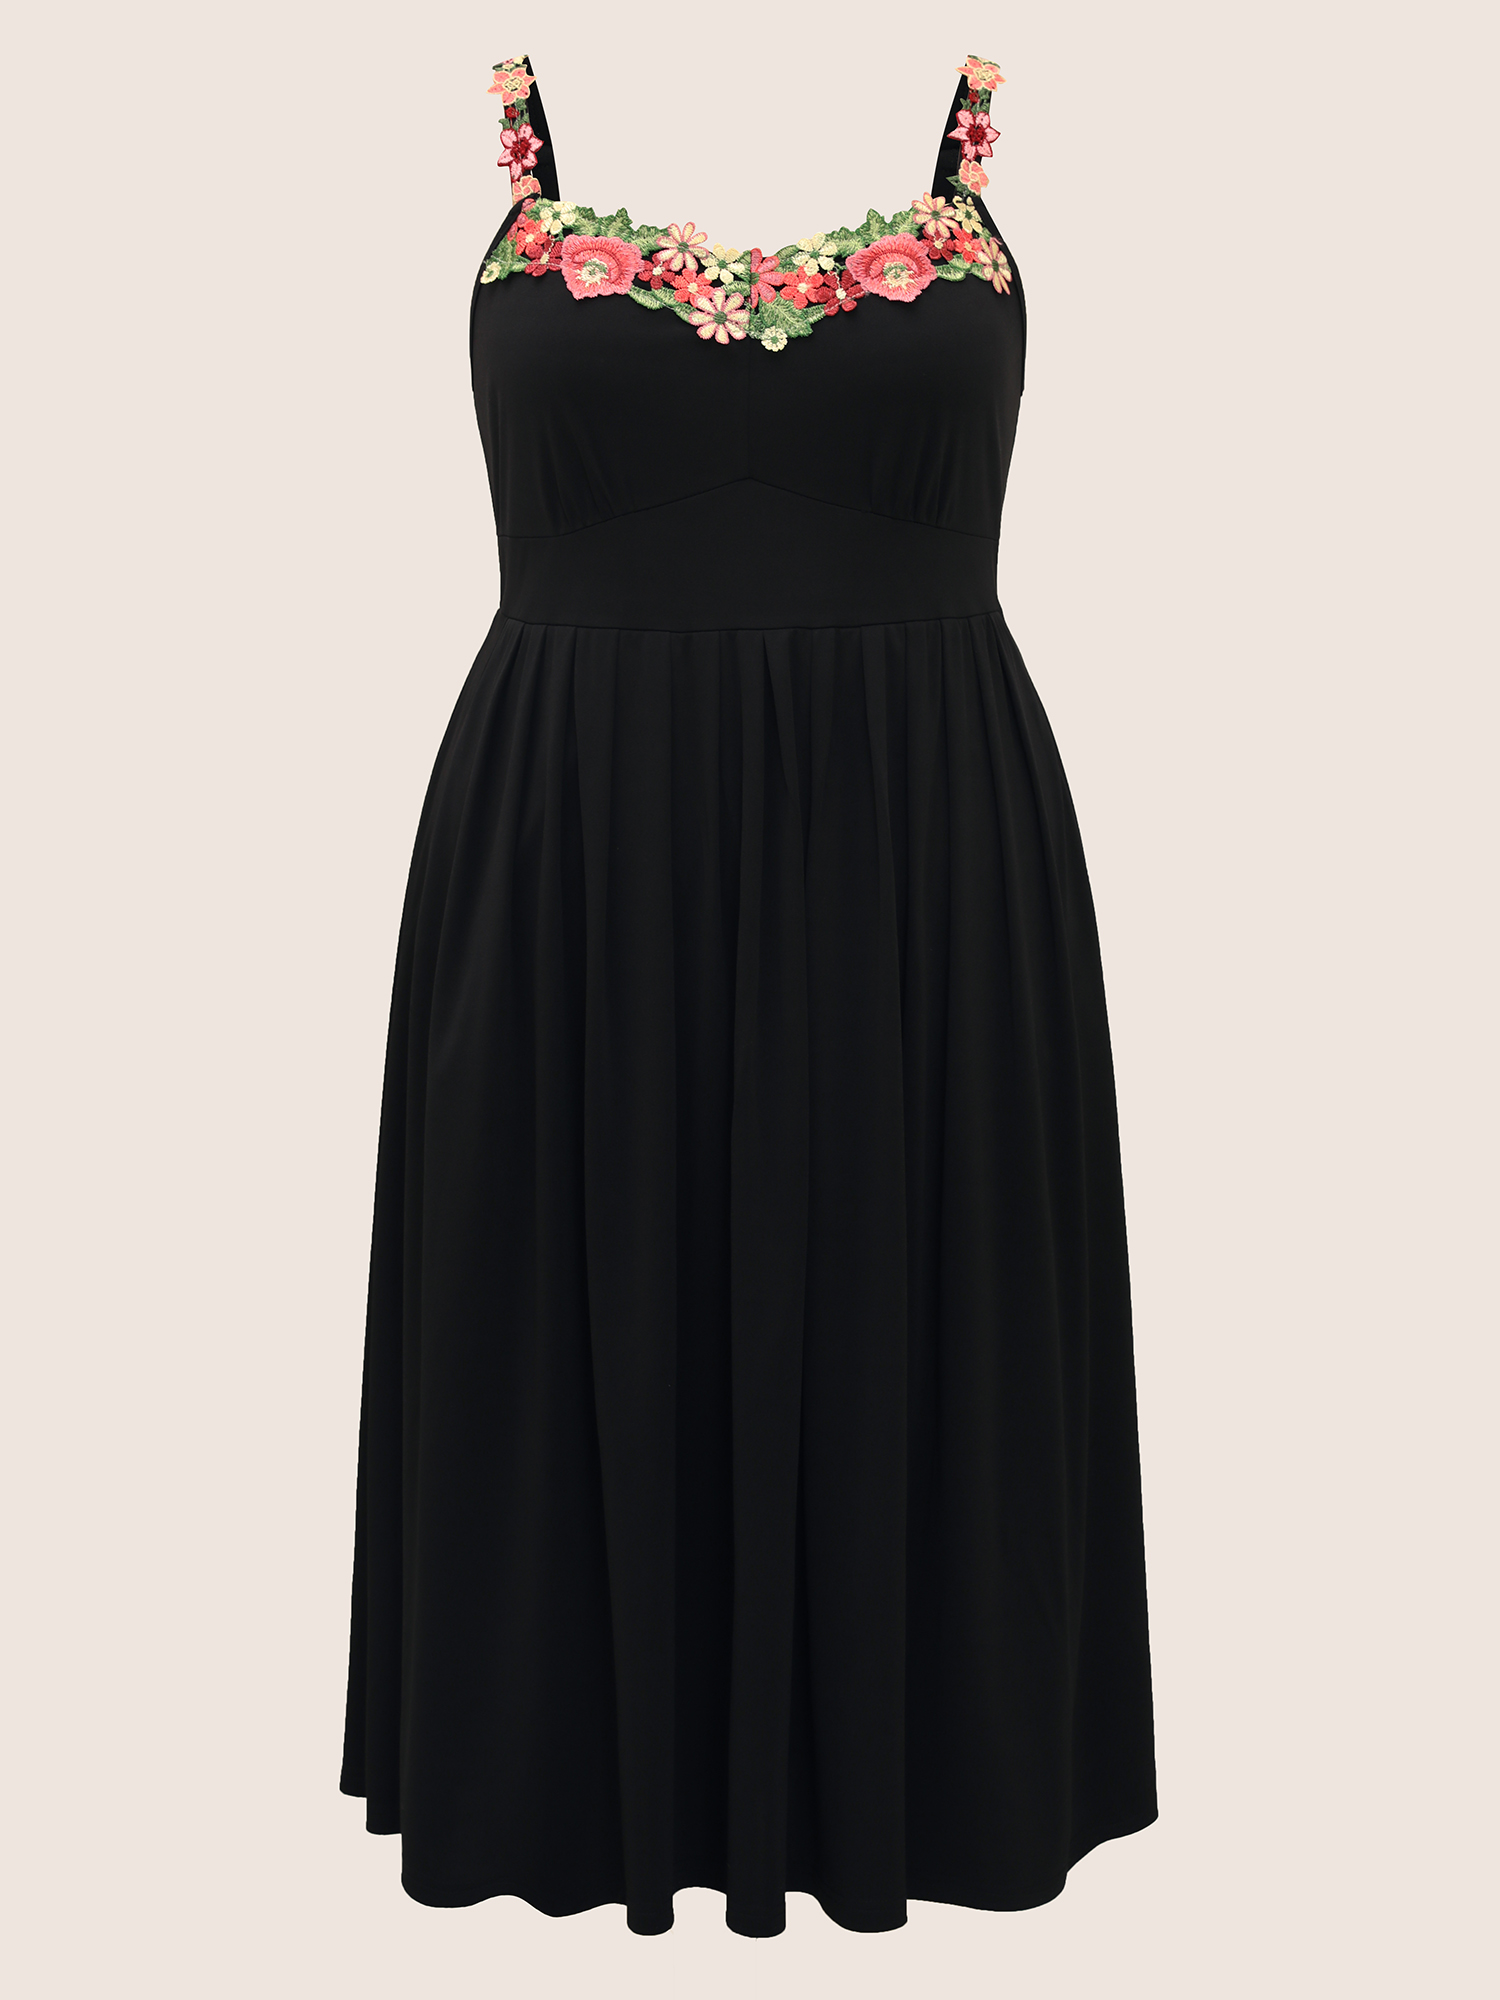 

Plus Size Floral Embroidered Pocket Midi Cami Dress Black Women Elegant Embroidered Heart neckline Sleeveless Curvy BloomChic